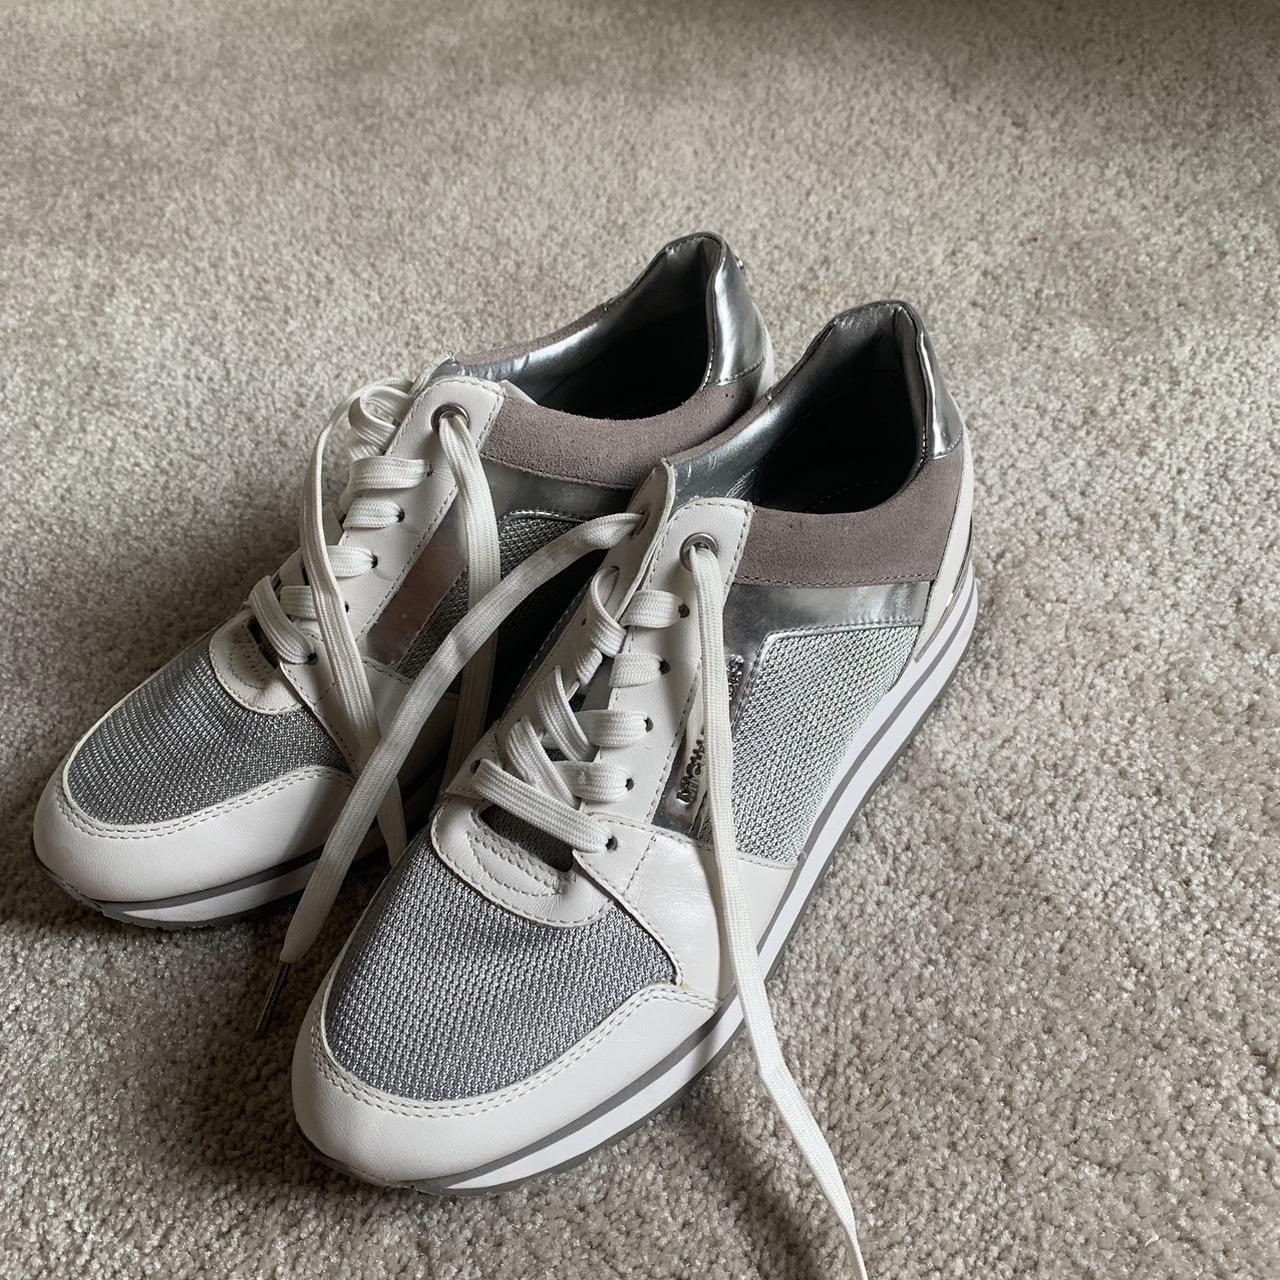 Michael Kors Metallic Silver Black Mesh Tennis Shoes Sneakers Women's Size  7M - $44 - From Carey